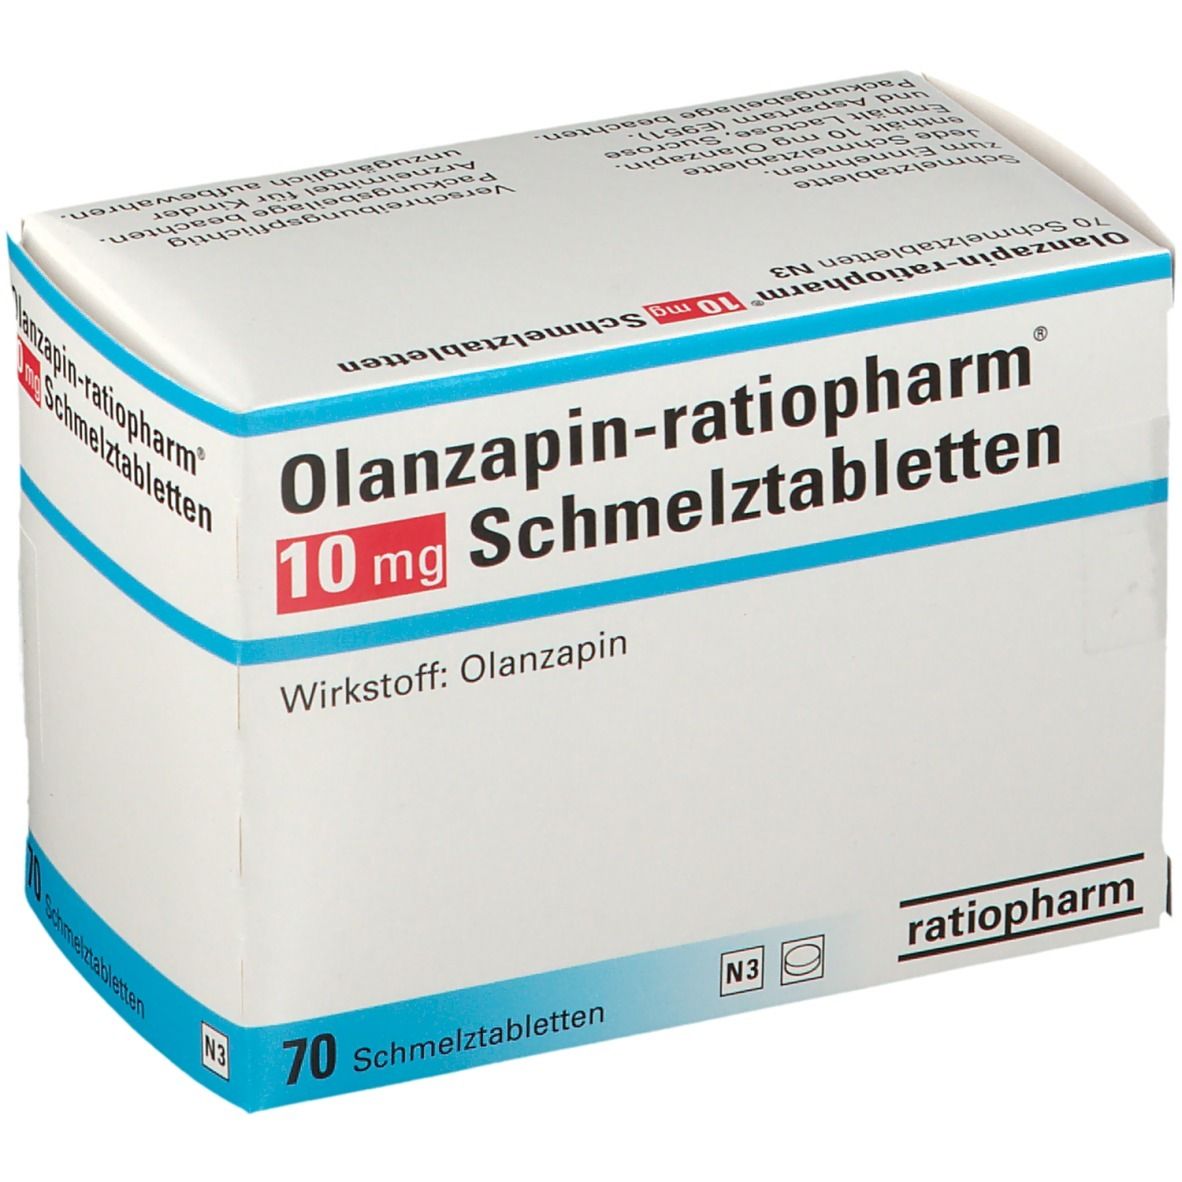 Olanzapin-ratiopharm® 10 mg